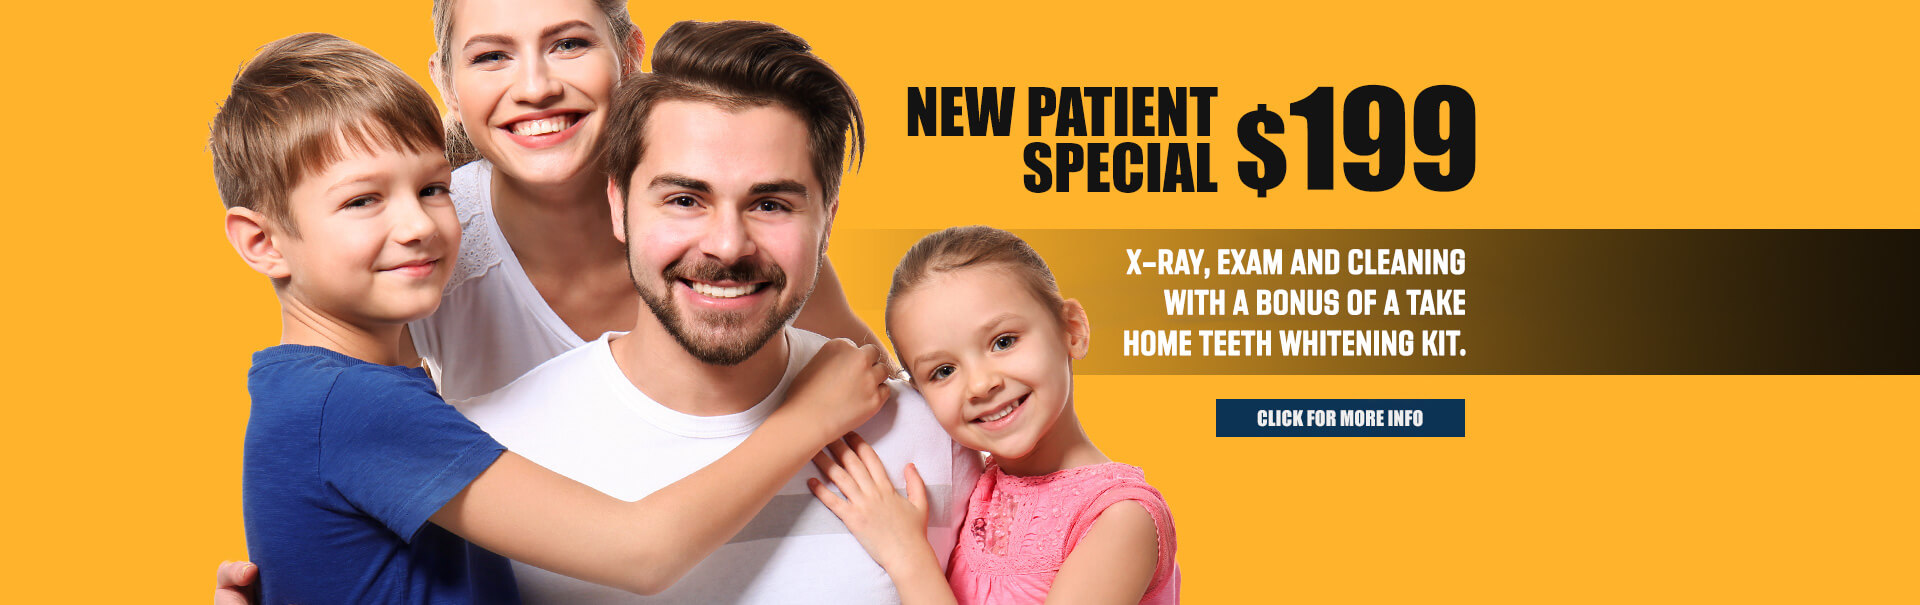 New Patient special for Teeth Whitening near Manhattan Beach, CA